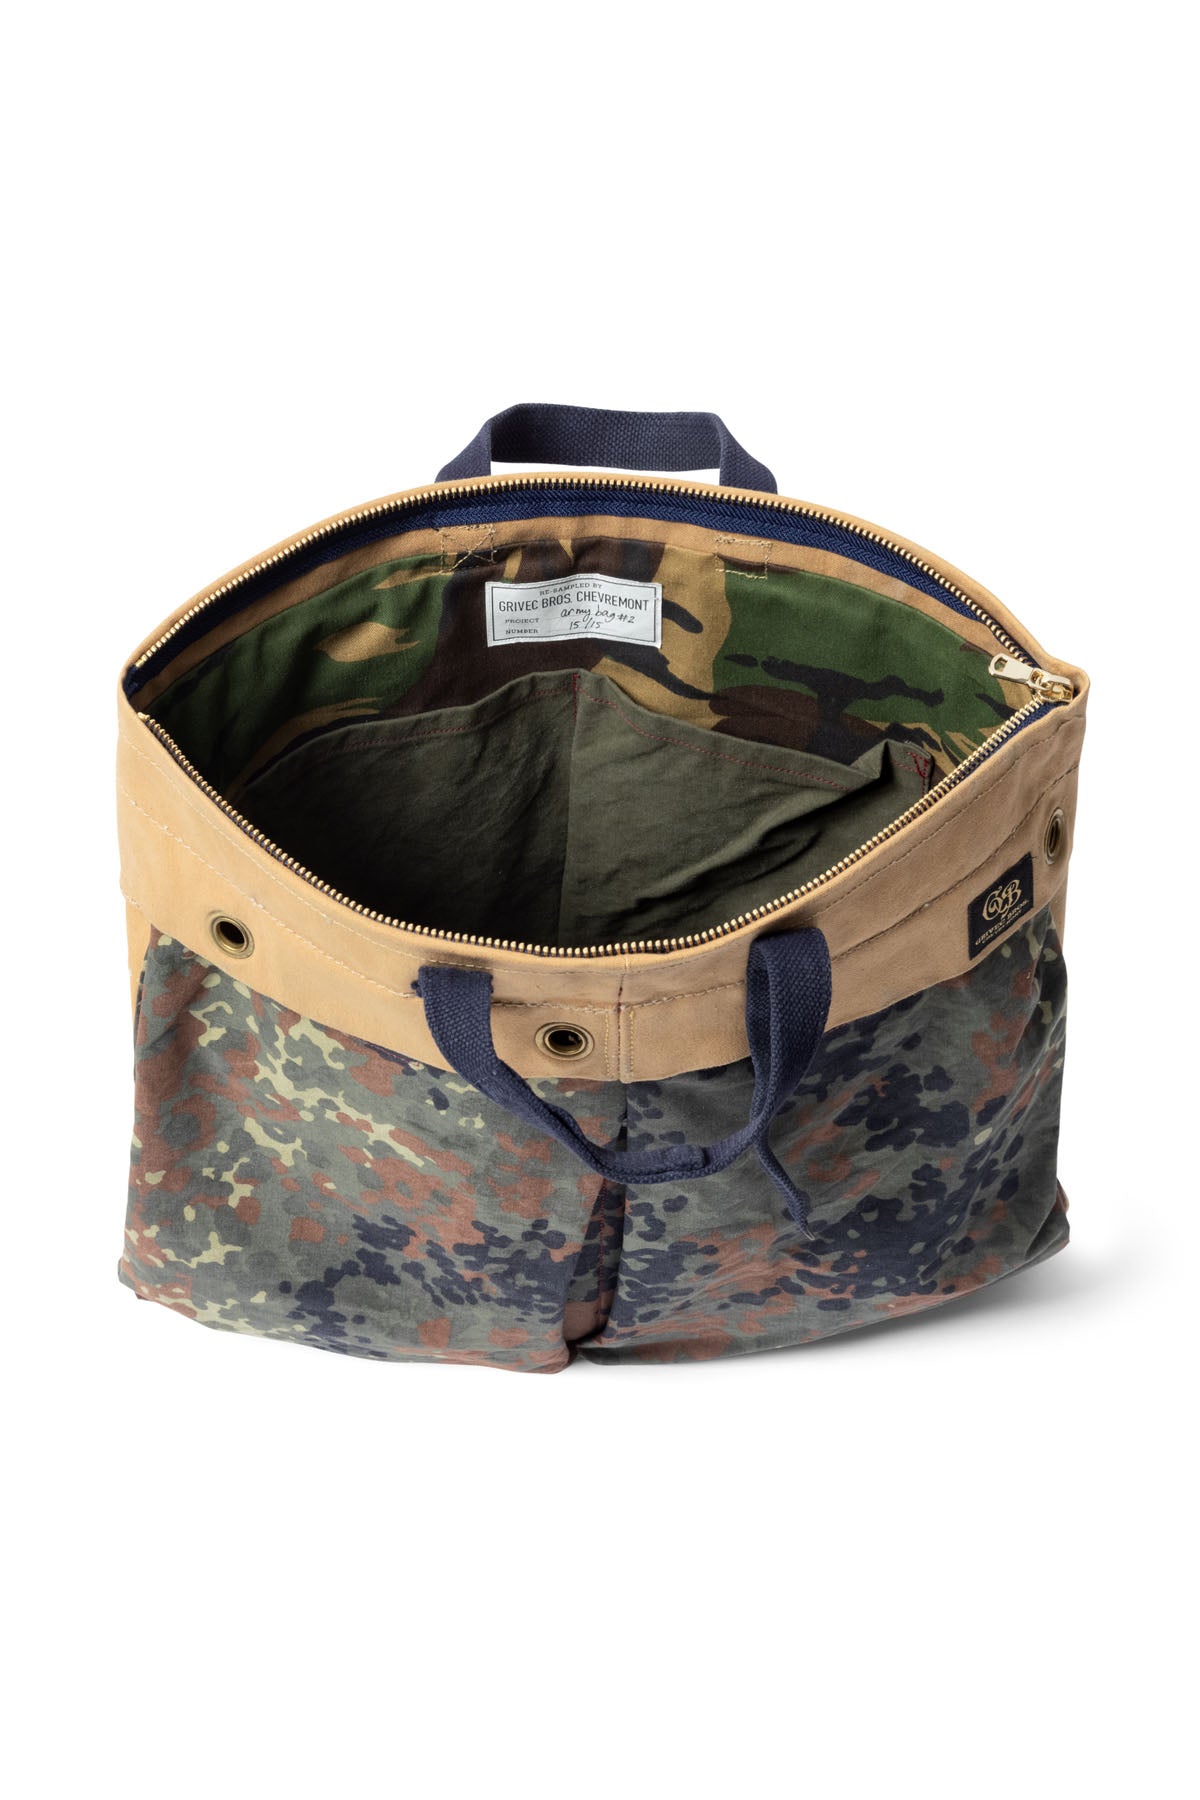 Military GI Style Flyers Helmet Bag